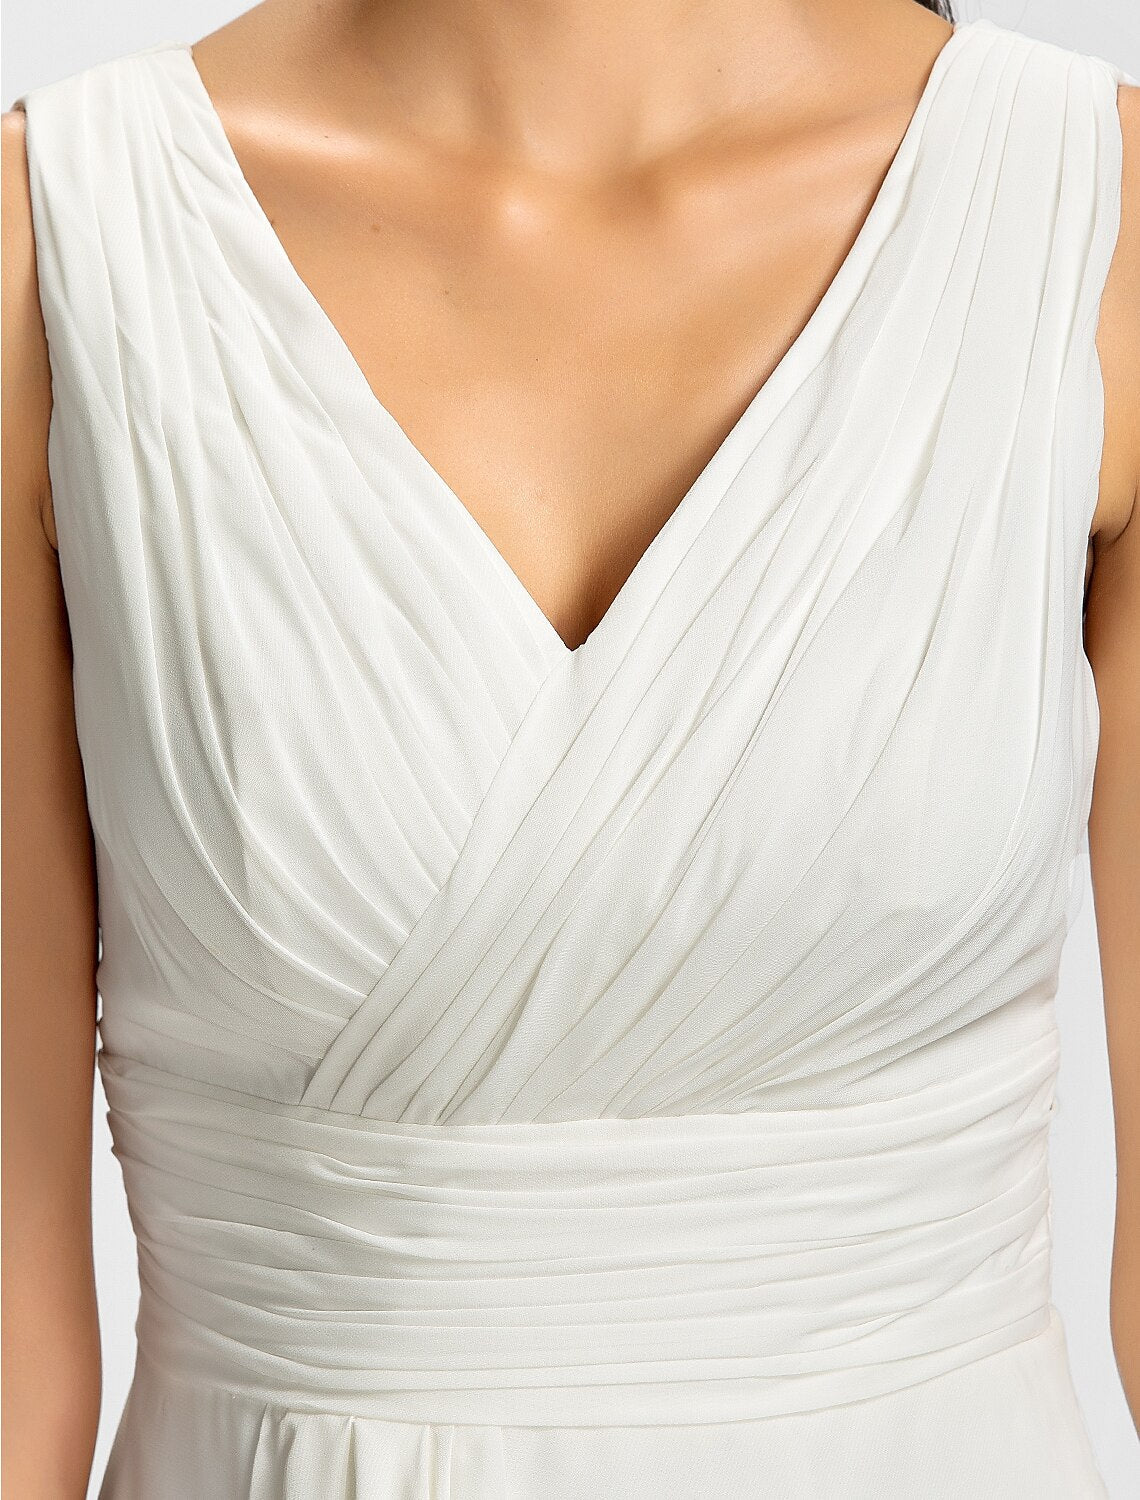 Sheath / Column V Neck Floor Length Chiffon Bridesmaid Dress with Draping / Sash / Ribbon